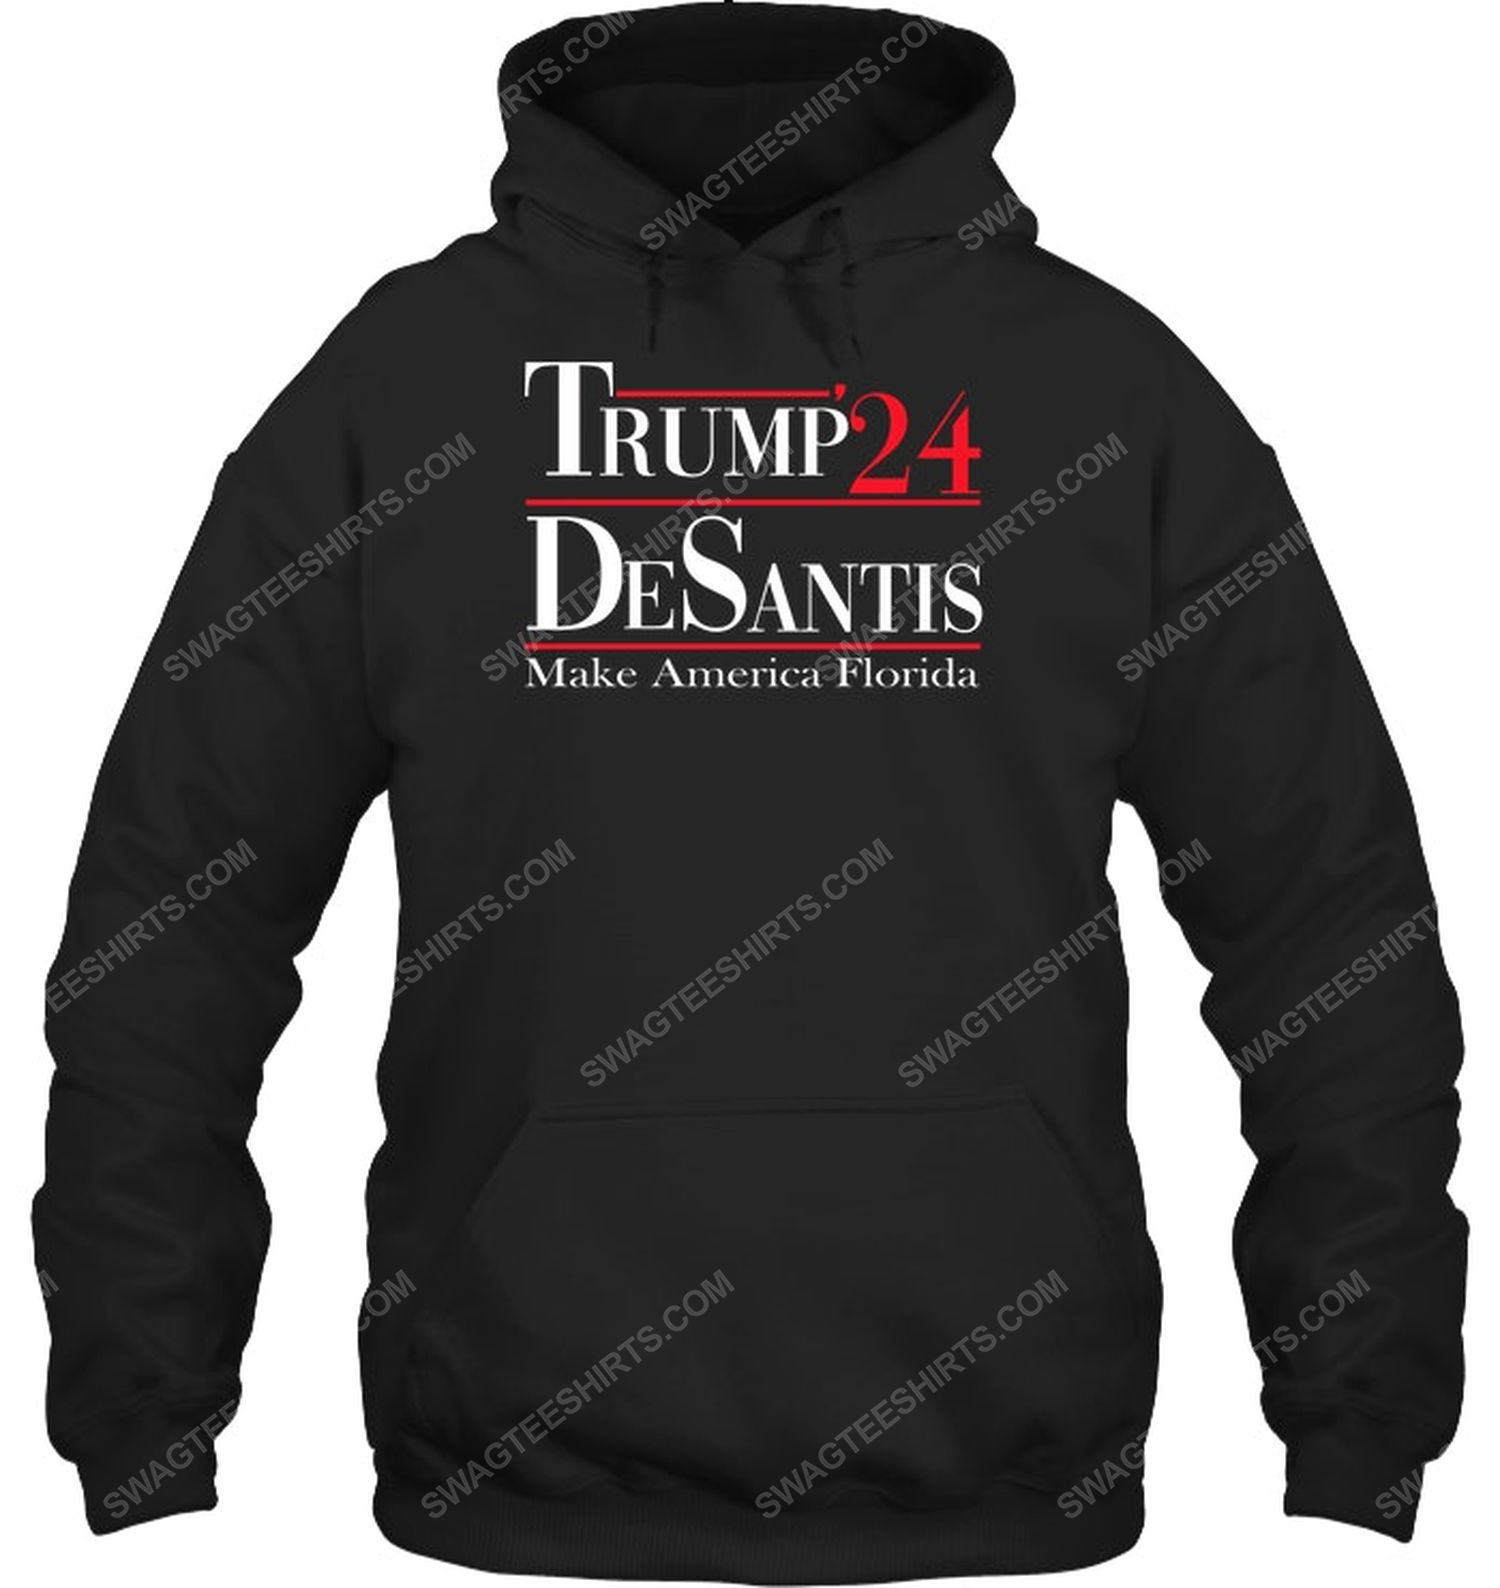 Trump 24 desantis make america florida political hoodie